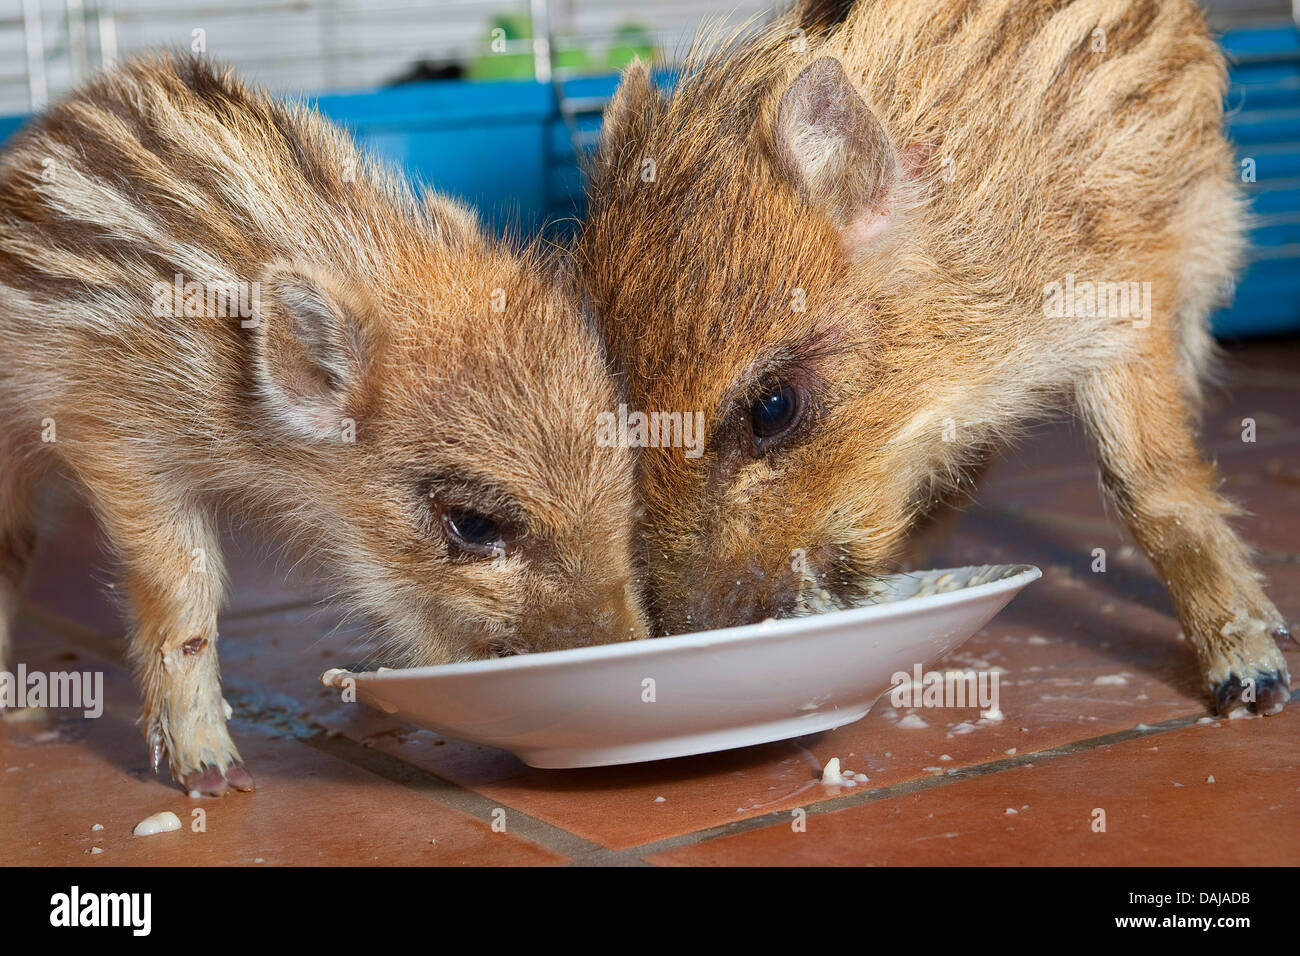 wild boar, pig, wild boar (Sus scrofa), two gentle young animals feeding in milk softened zwiebacks from a plate , Germany Stock Photo